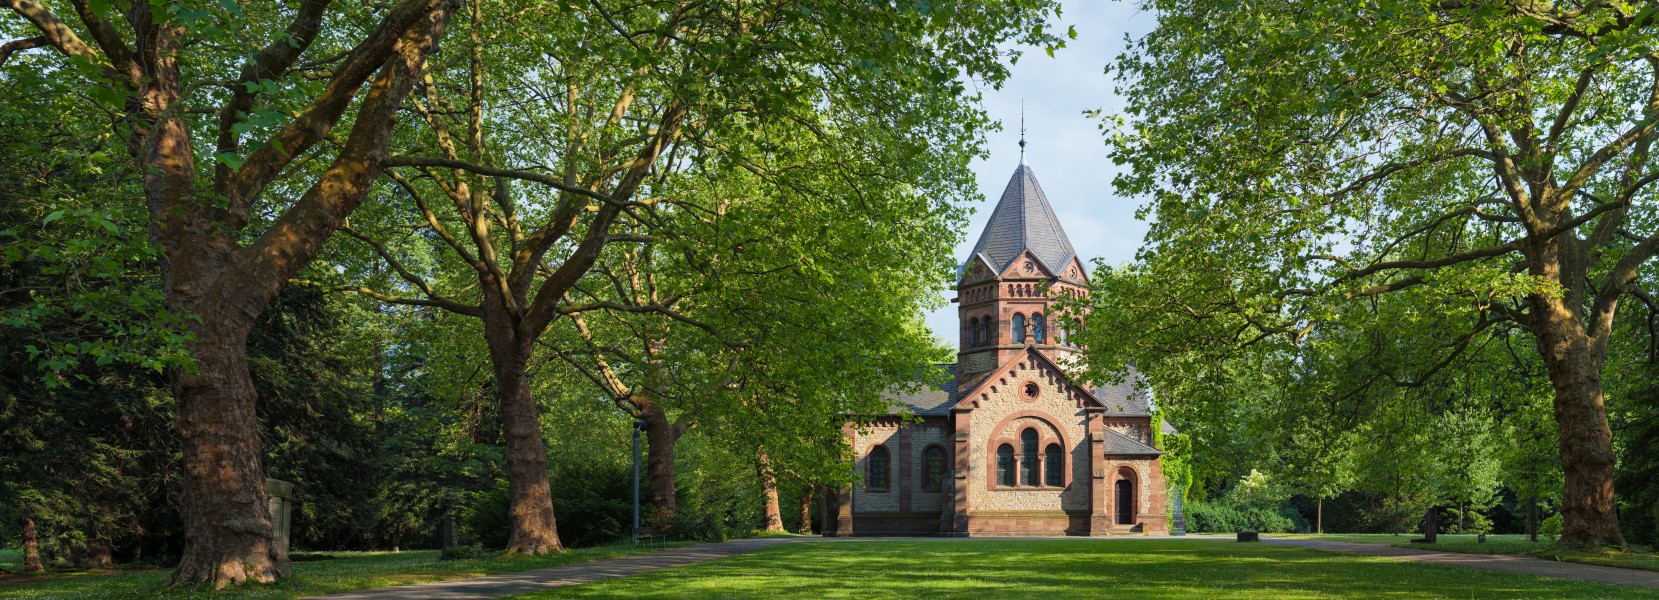 Kapelle Stadtfriedhof Göttingen 2017 03